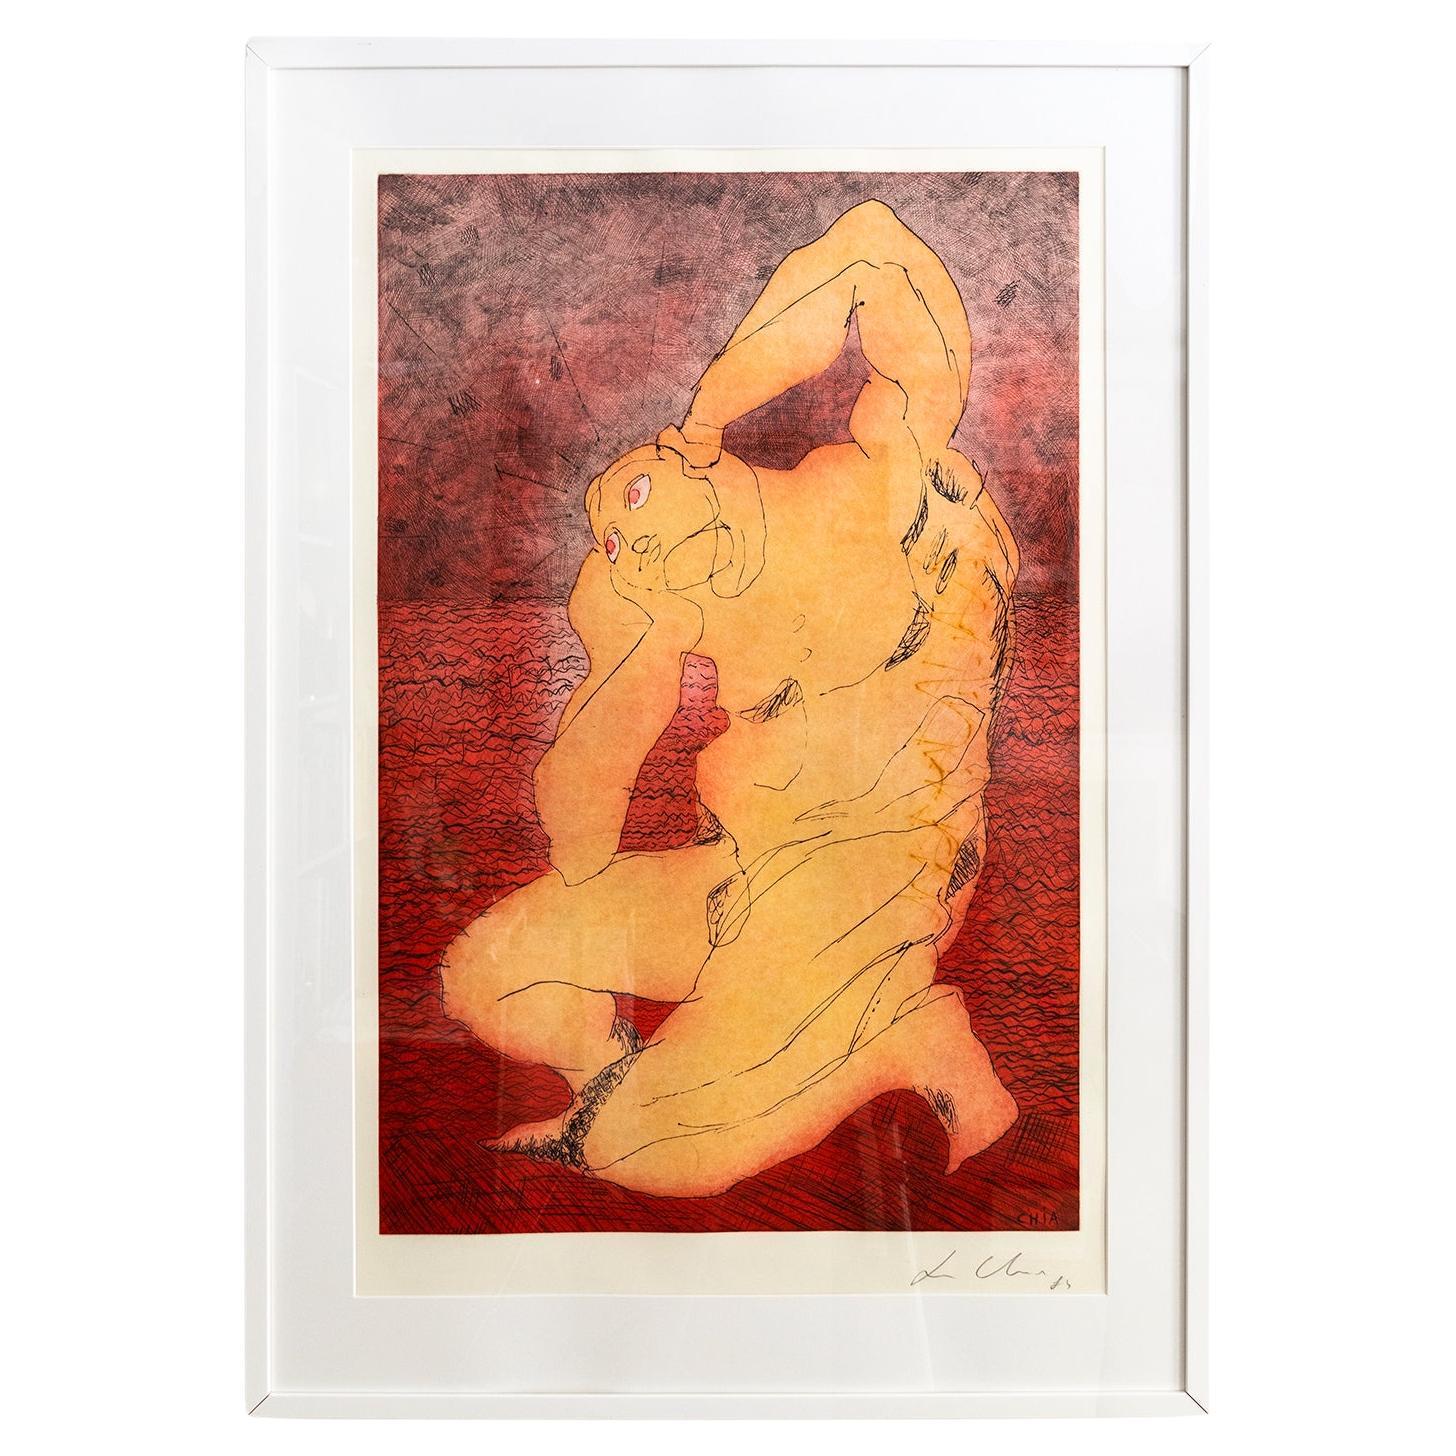 Sandro Chia Aquatint Print in Red & Yellow, « Man & Sea » Post Modern